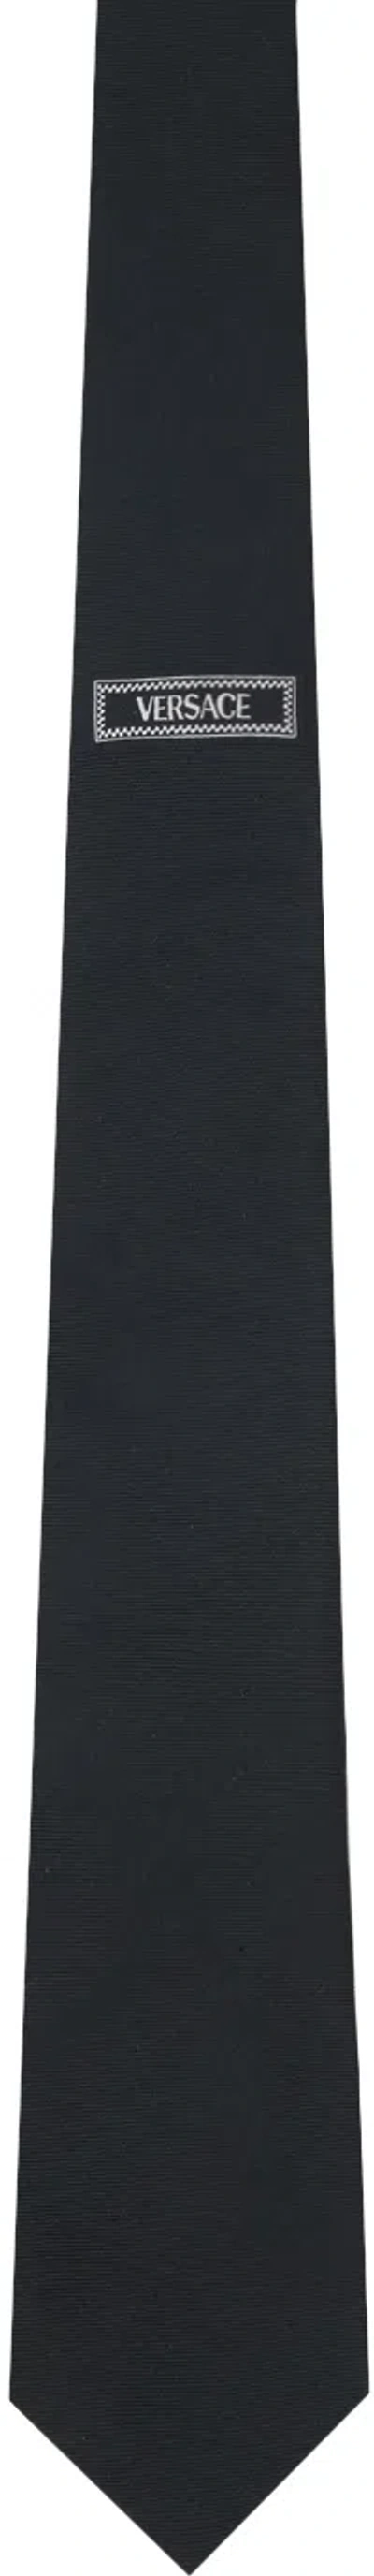 Versace Black 90s Vintage Logo Tie In 2b020-black+white